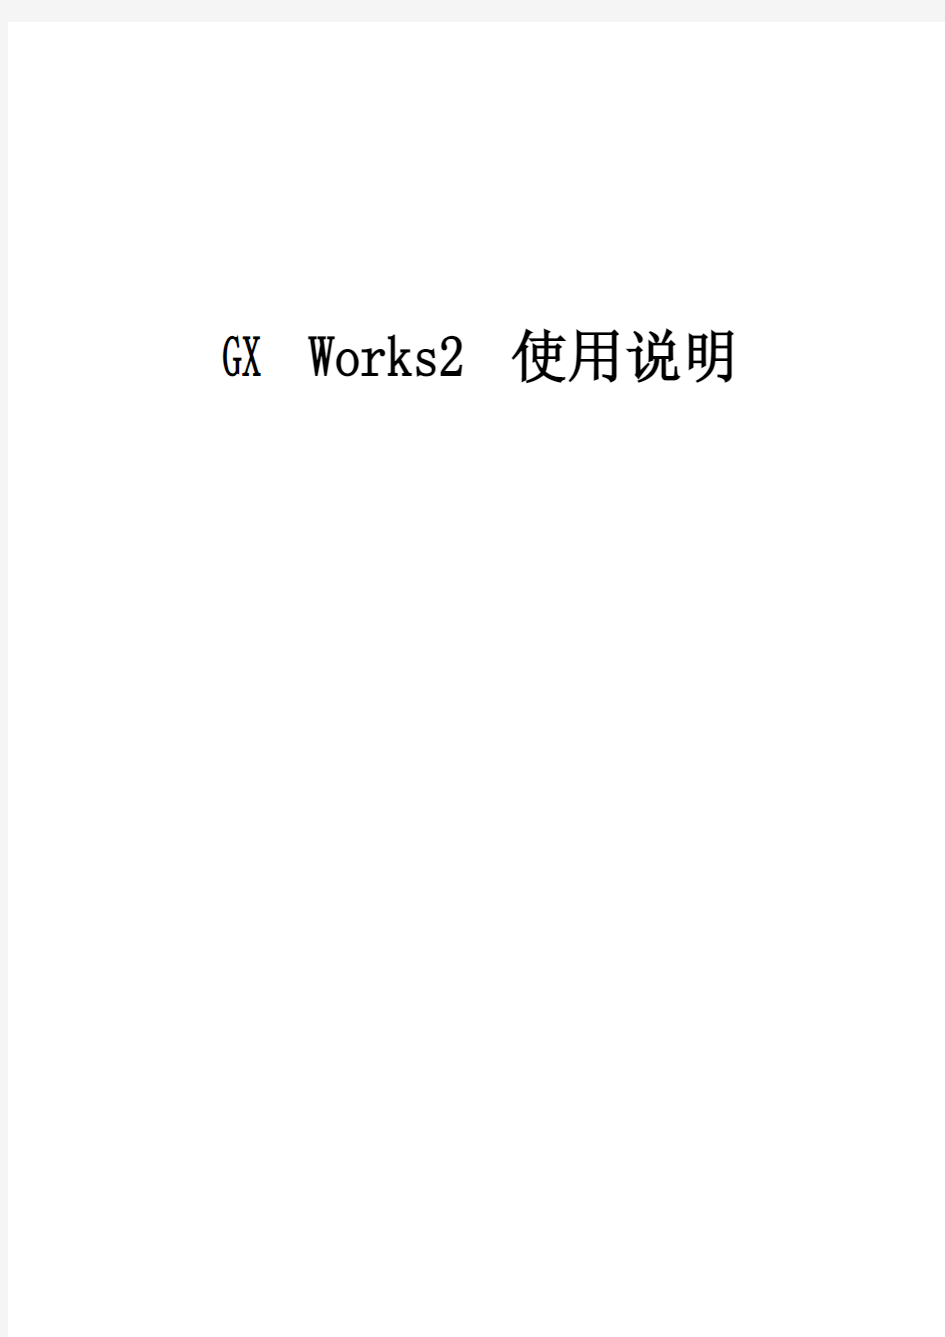 GX_Works2_使用说明